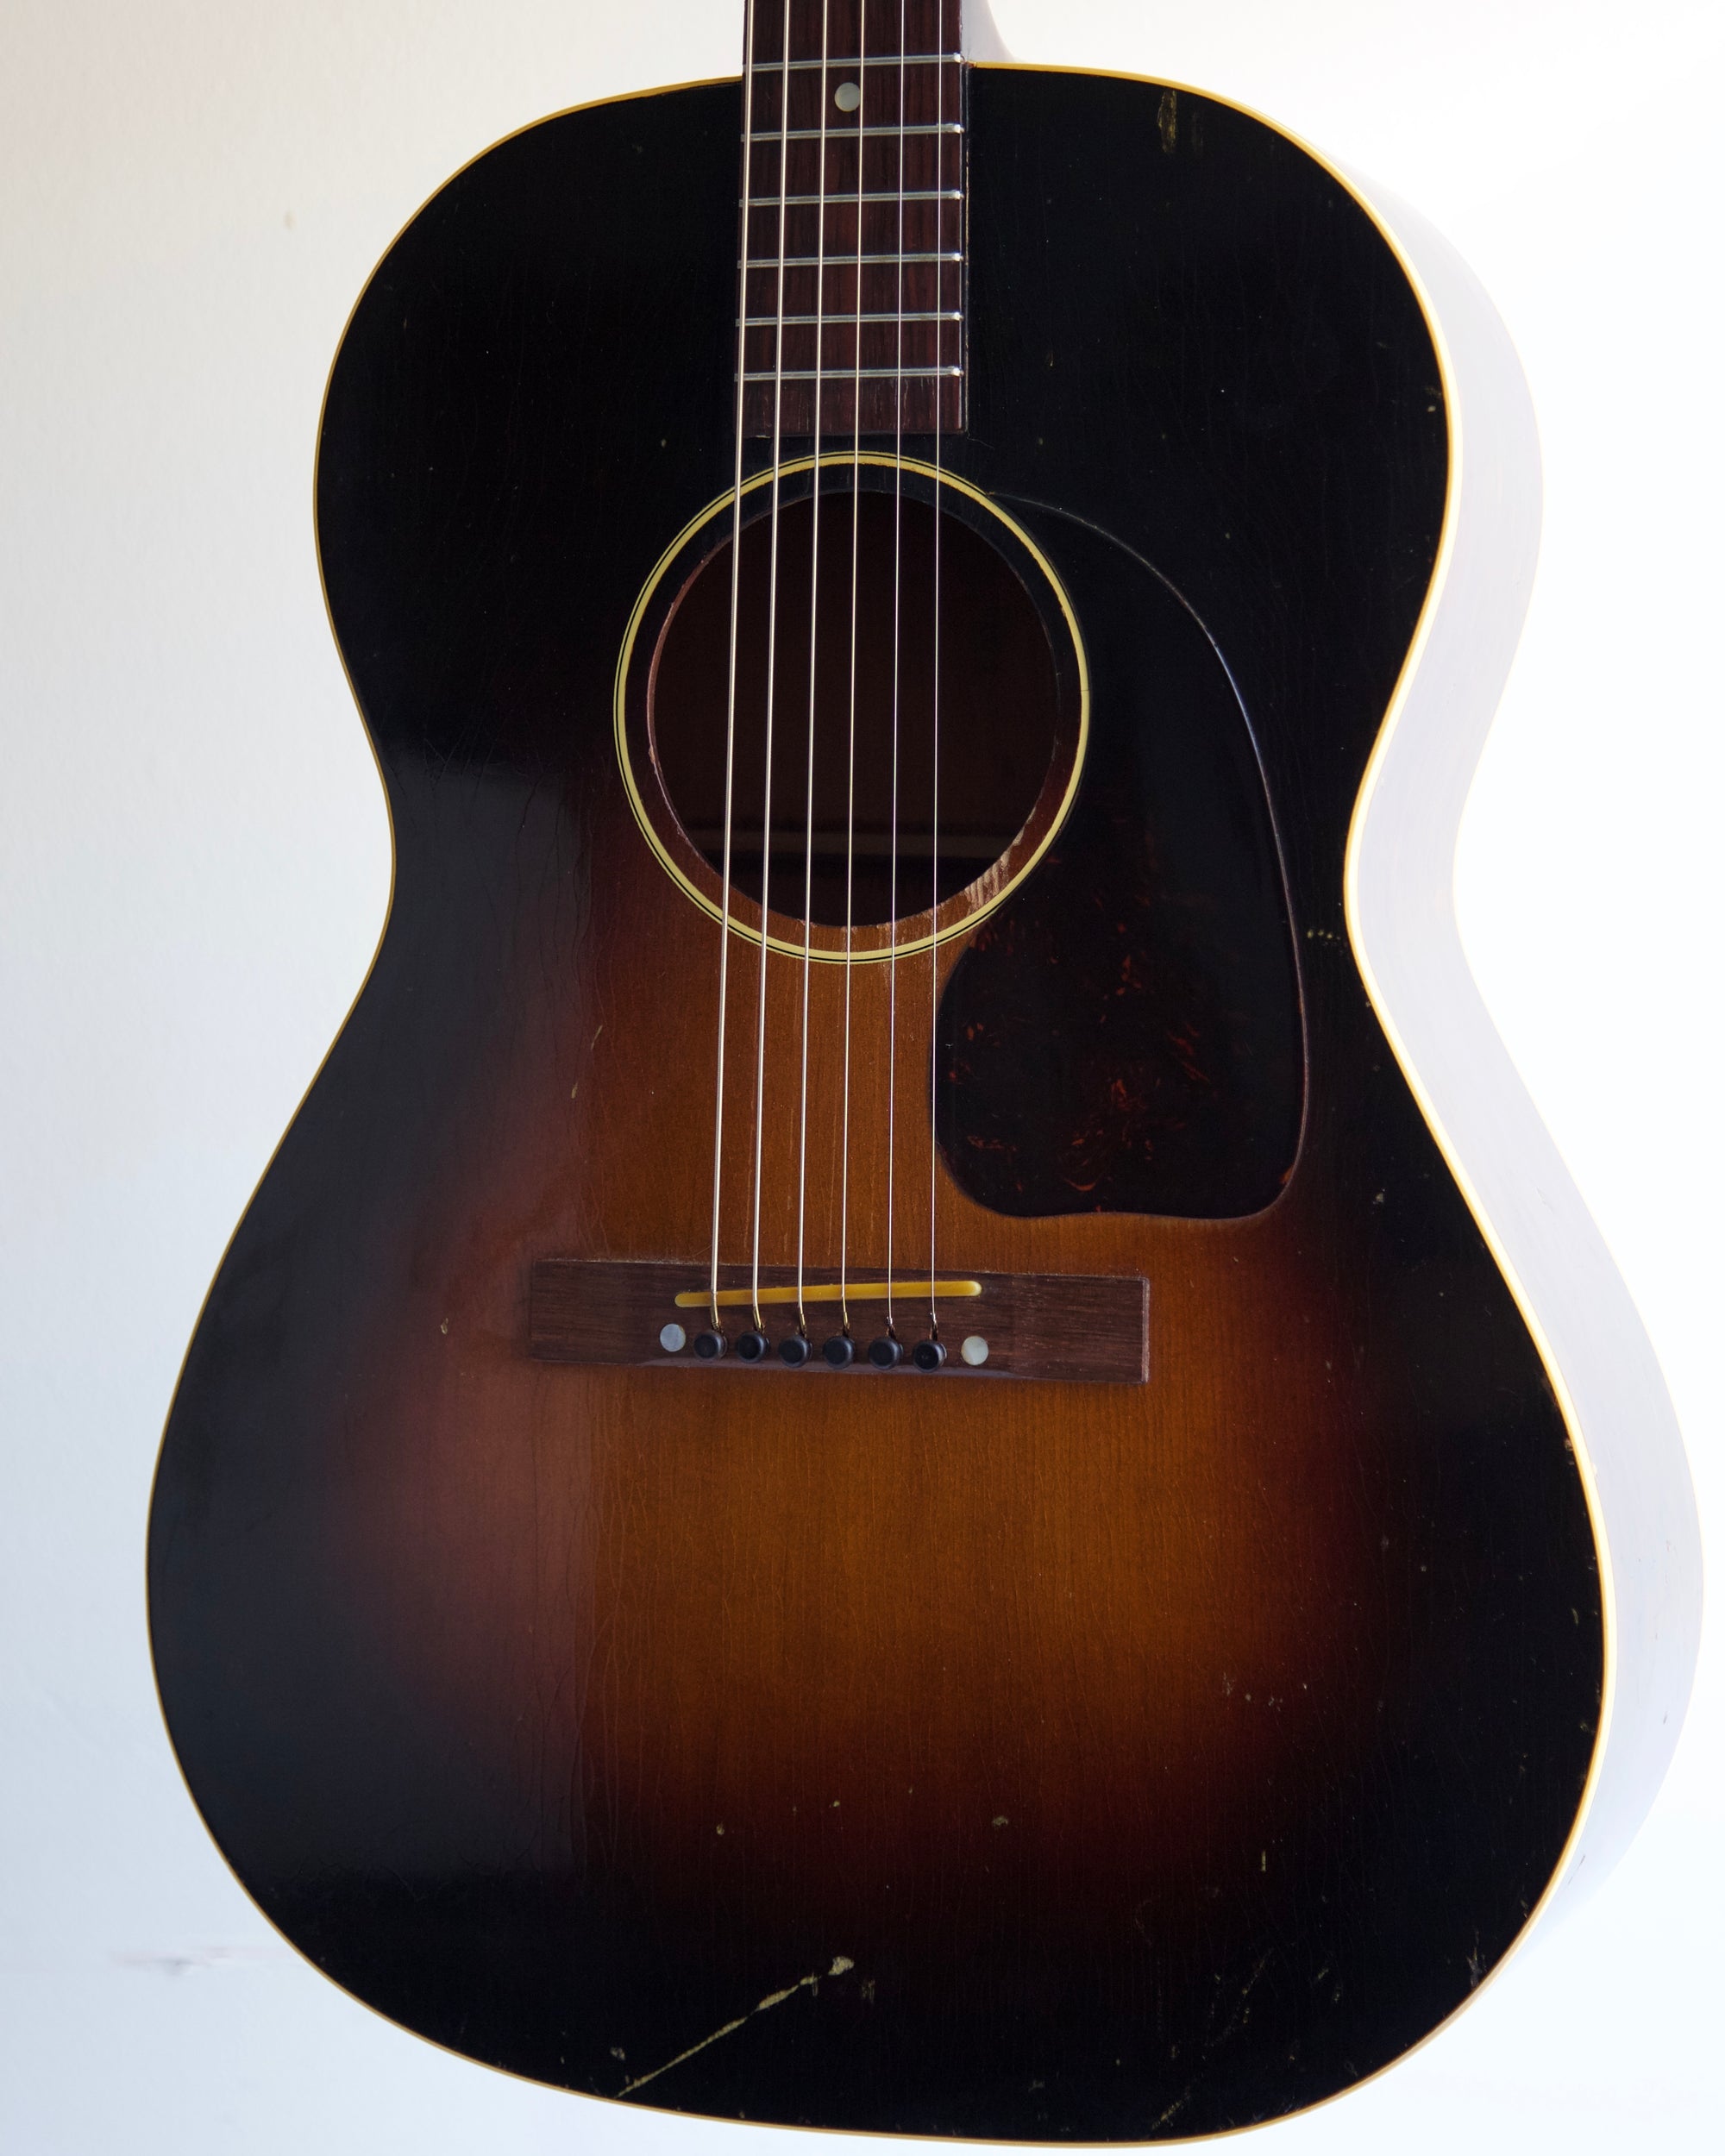 1954 Gibson LG-1